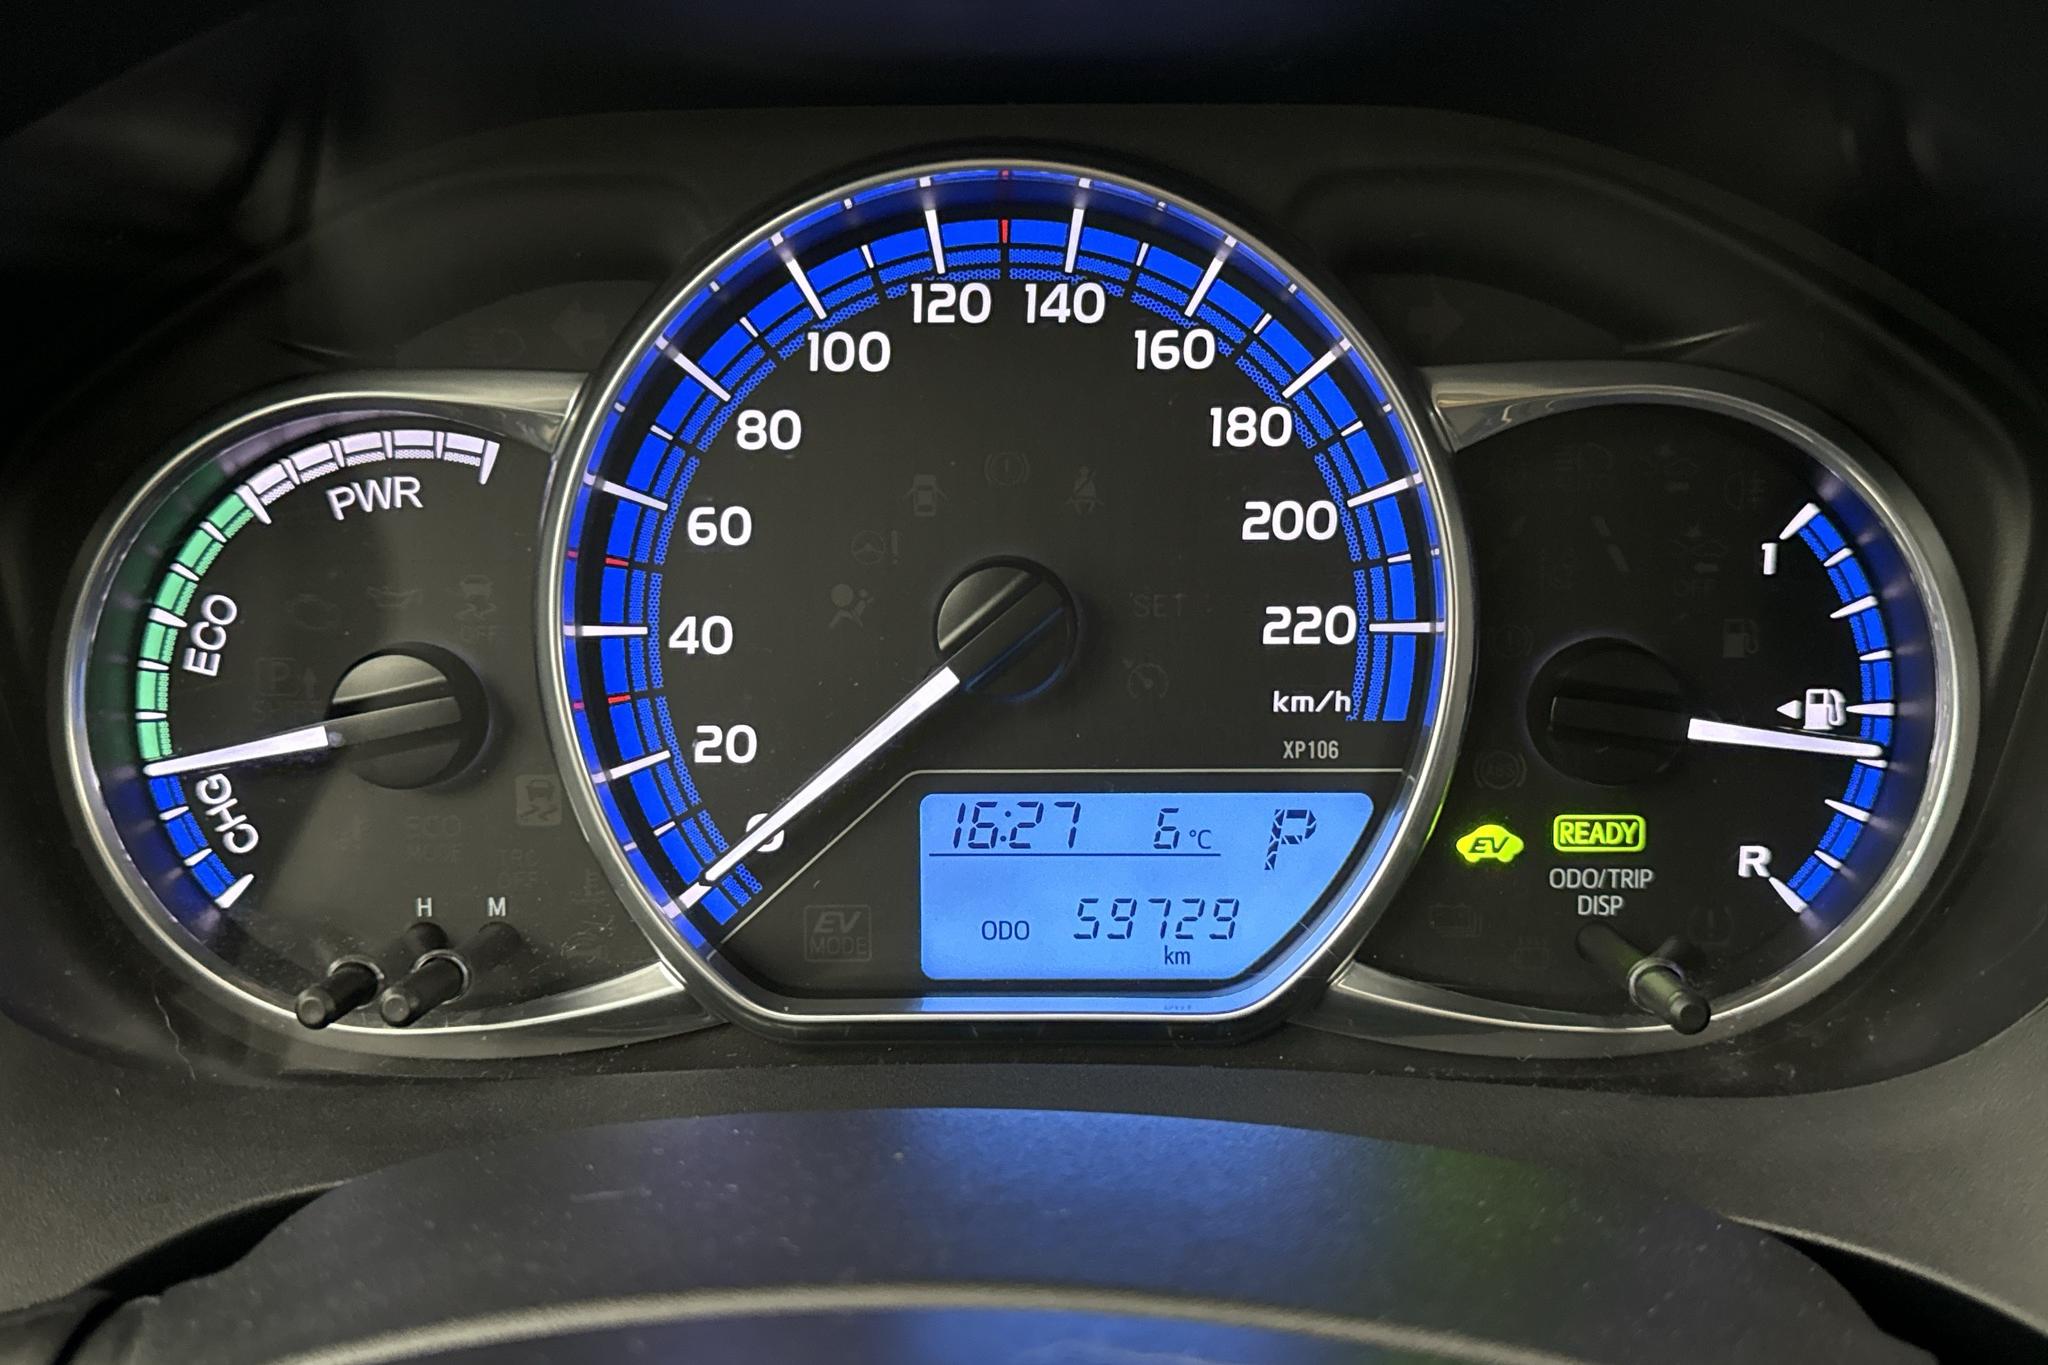 Toyota Yaris 1.5 Hybrid 5dr (101hk) - 59 730 km - Automatic - white - 2016